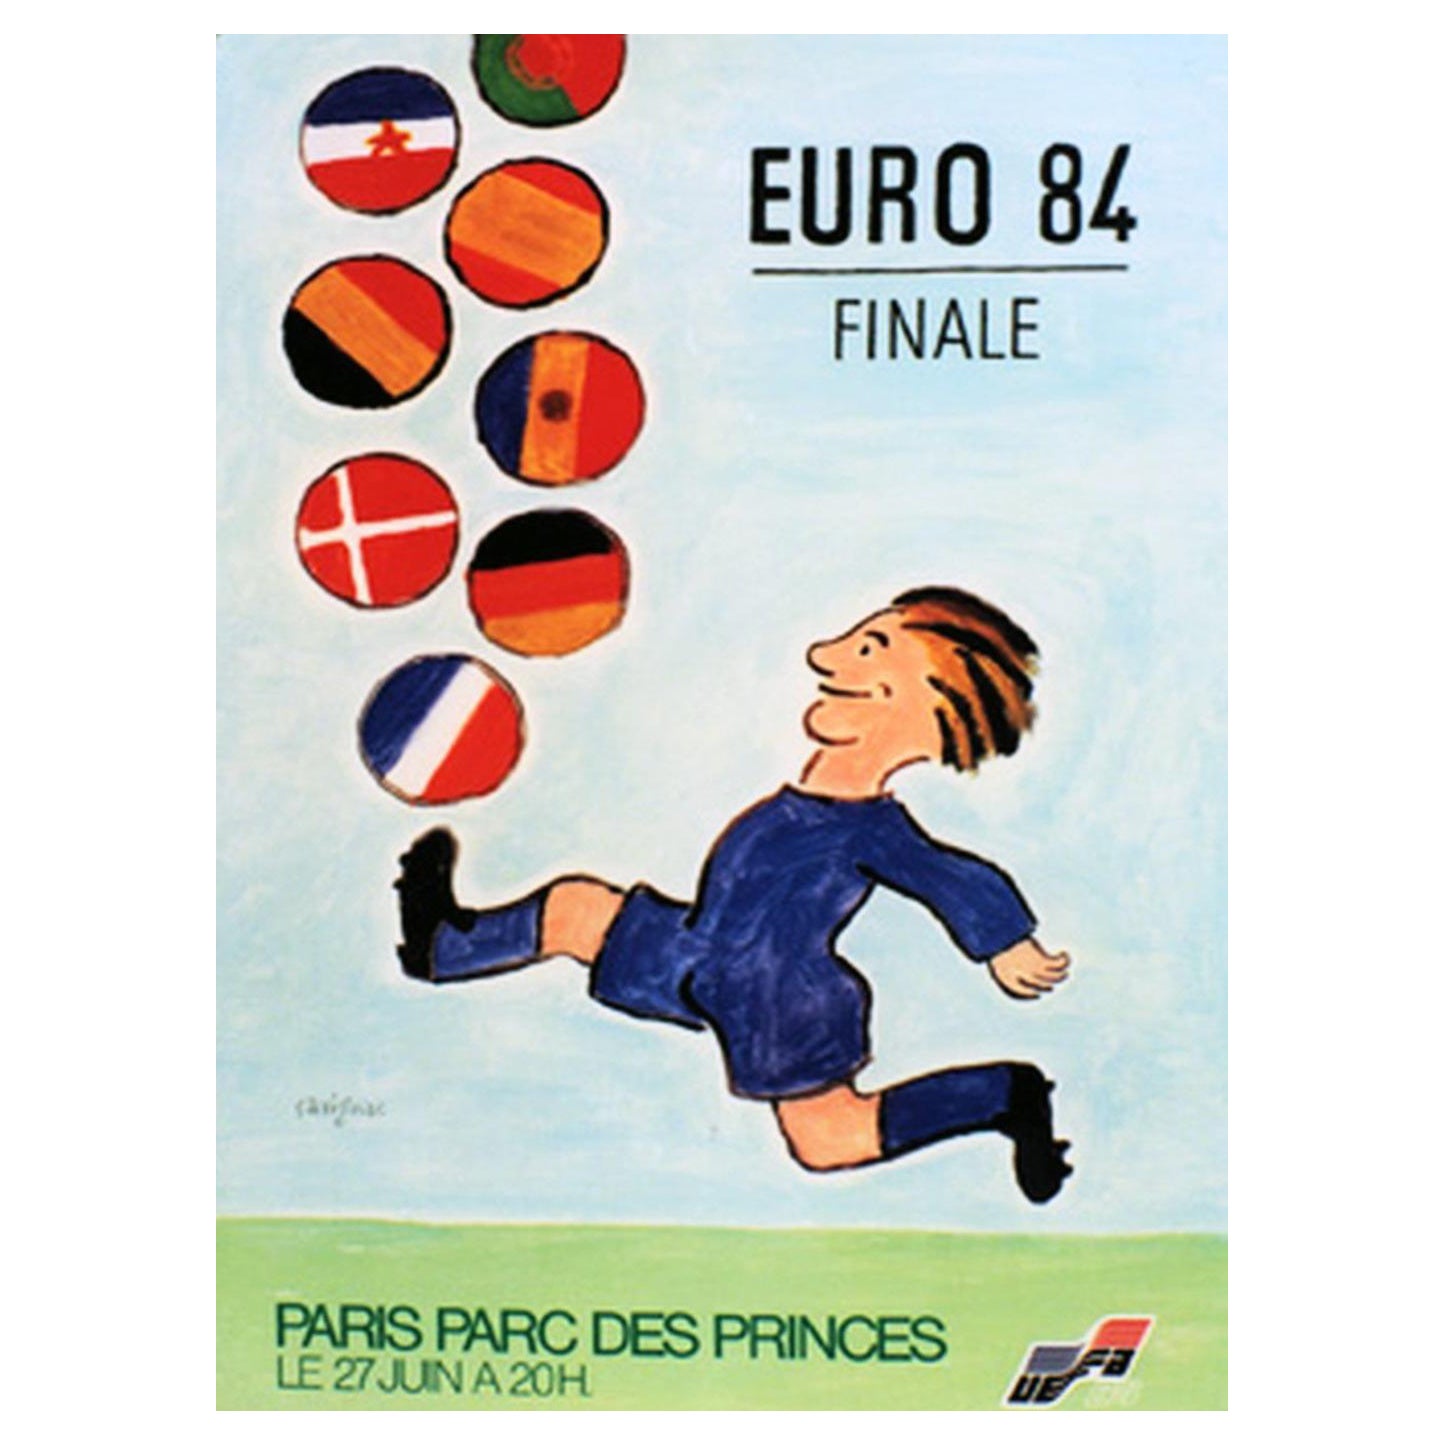 1984 Euro 84 - Finale Original Vintage Poster